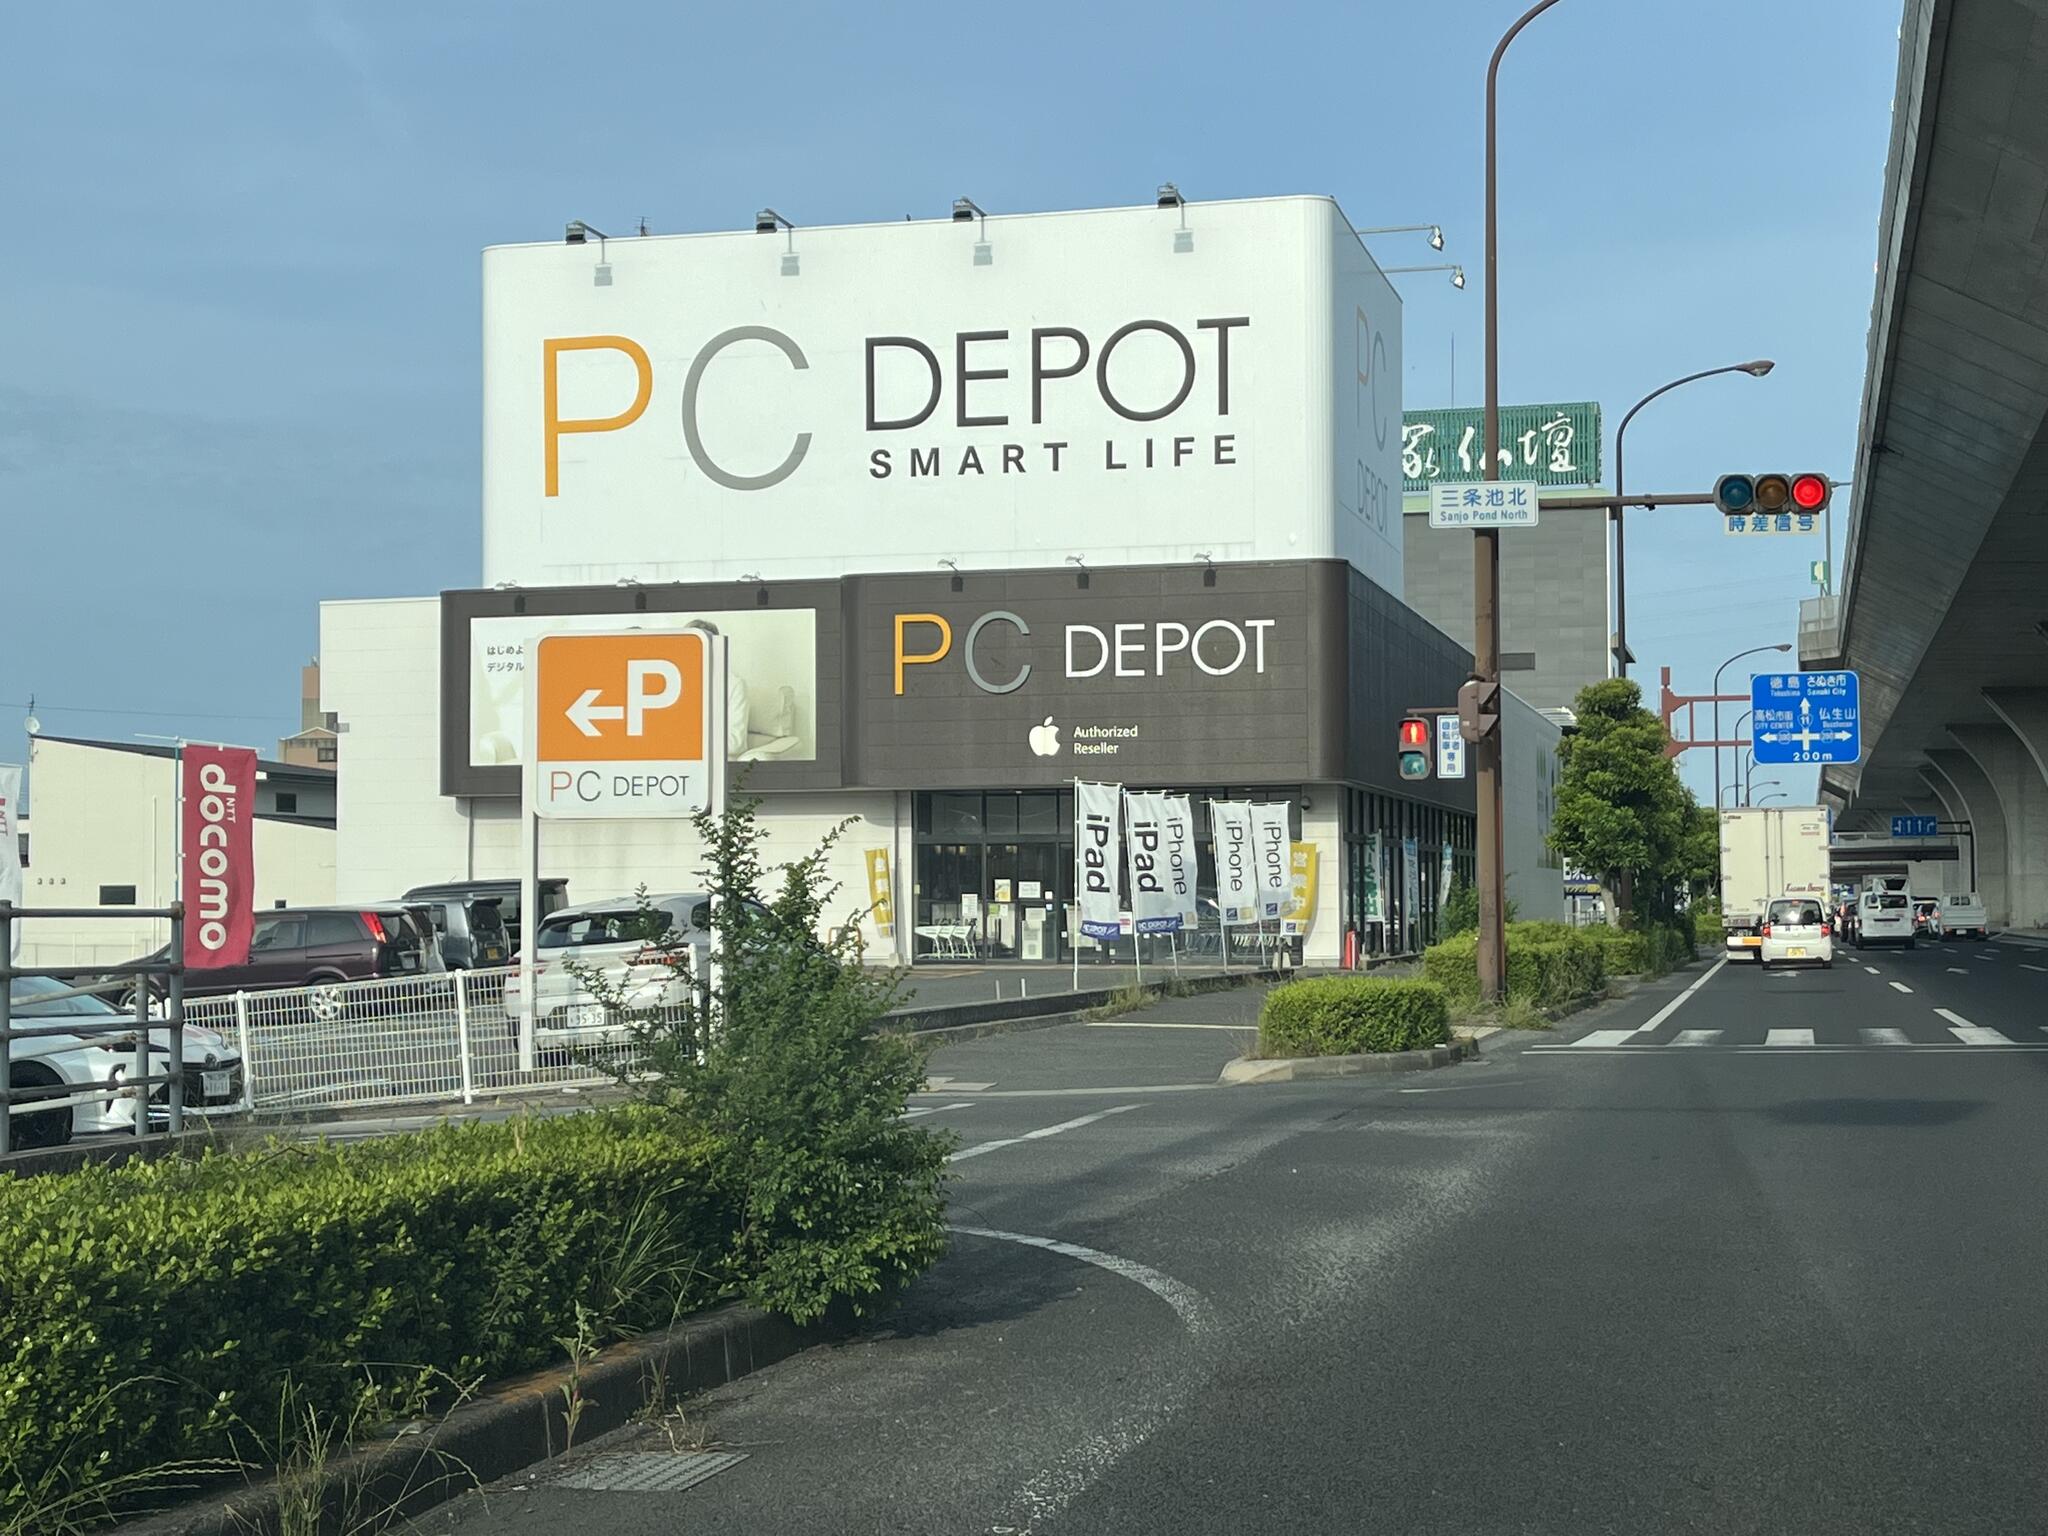 PCデポ スマートライフ高松東バイパス店の代表写真3